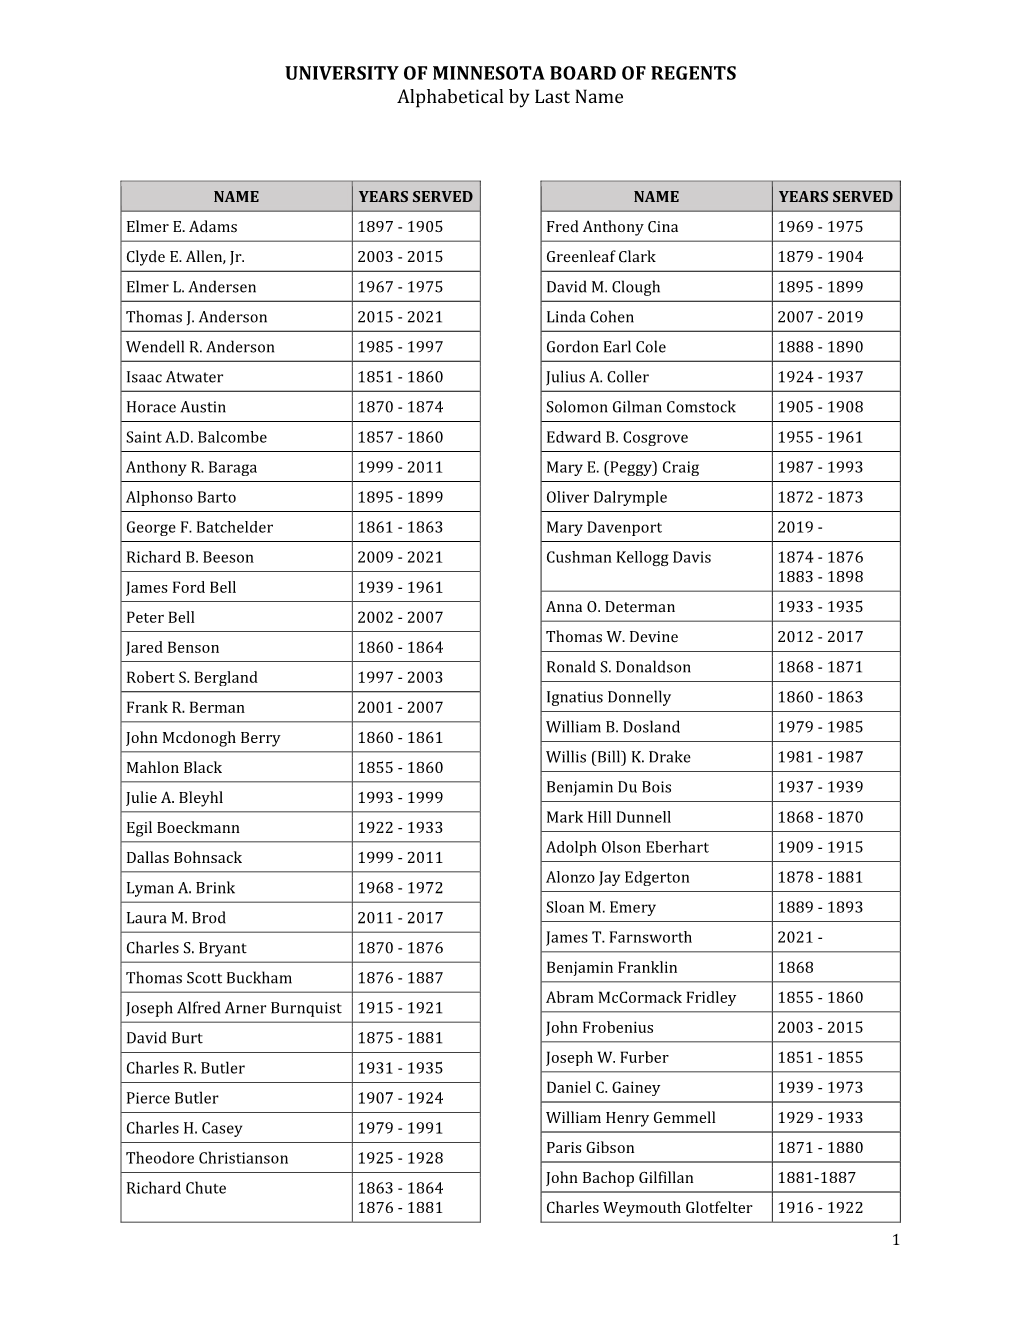 Historical List of Regents (PDF)